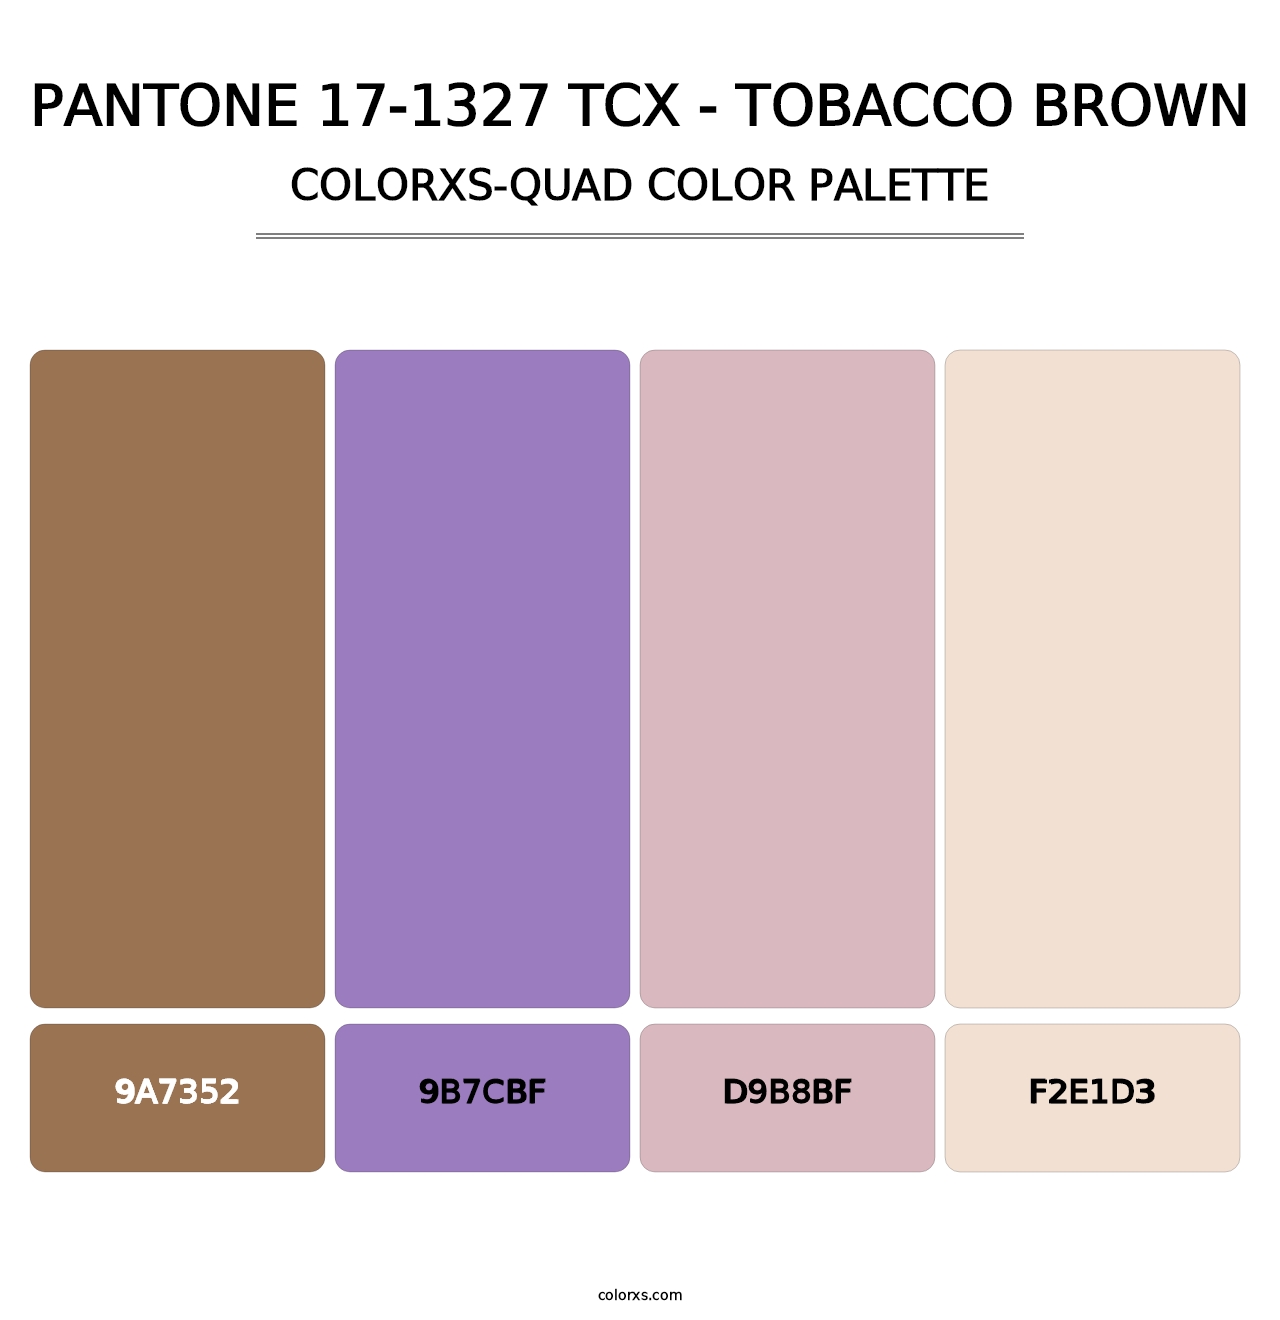 PANTONE 17-1327 TCX - Tobacco Brown - Colorxs Quad Palette